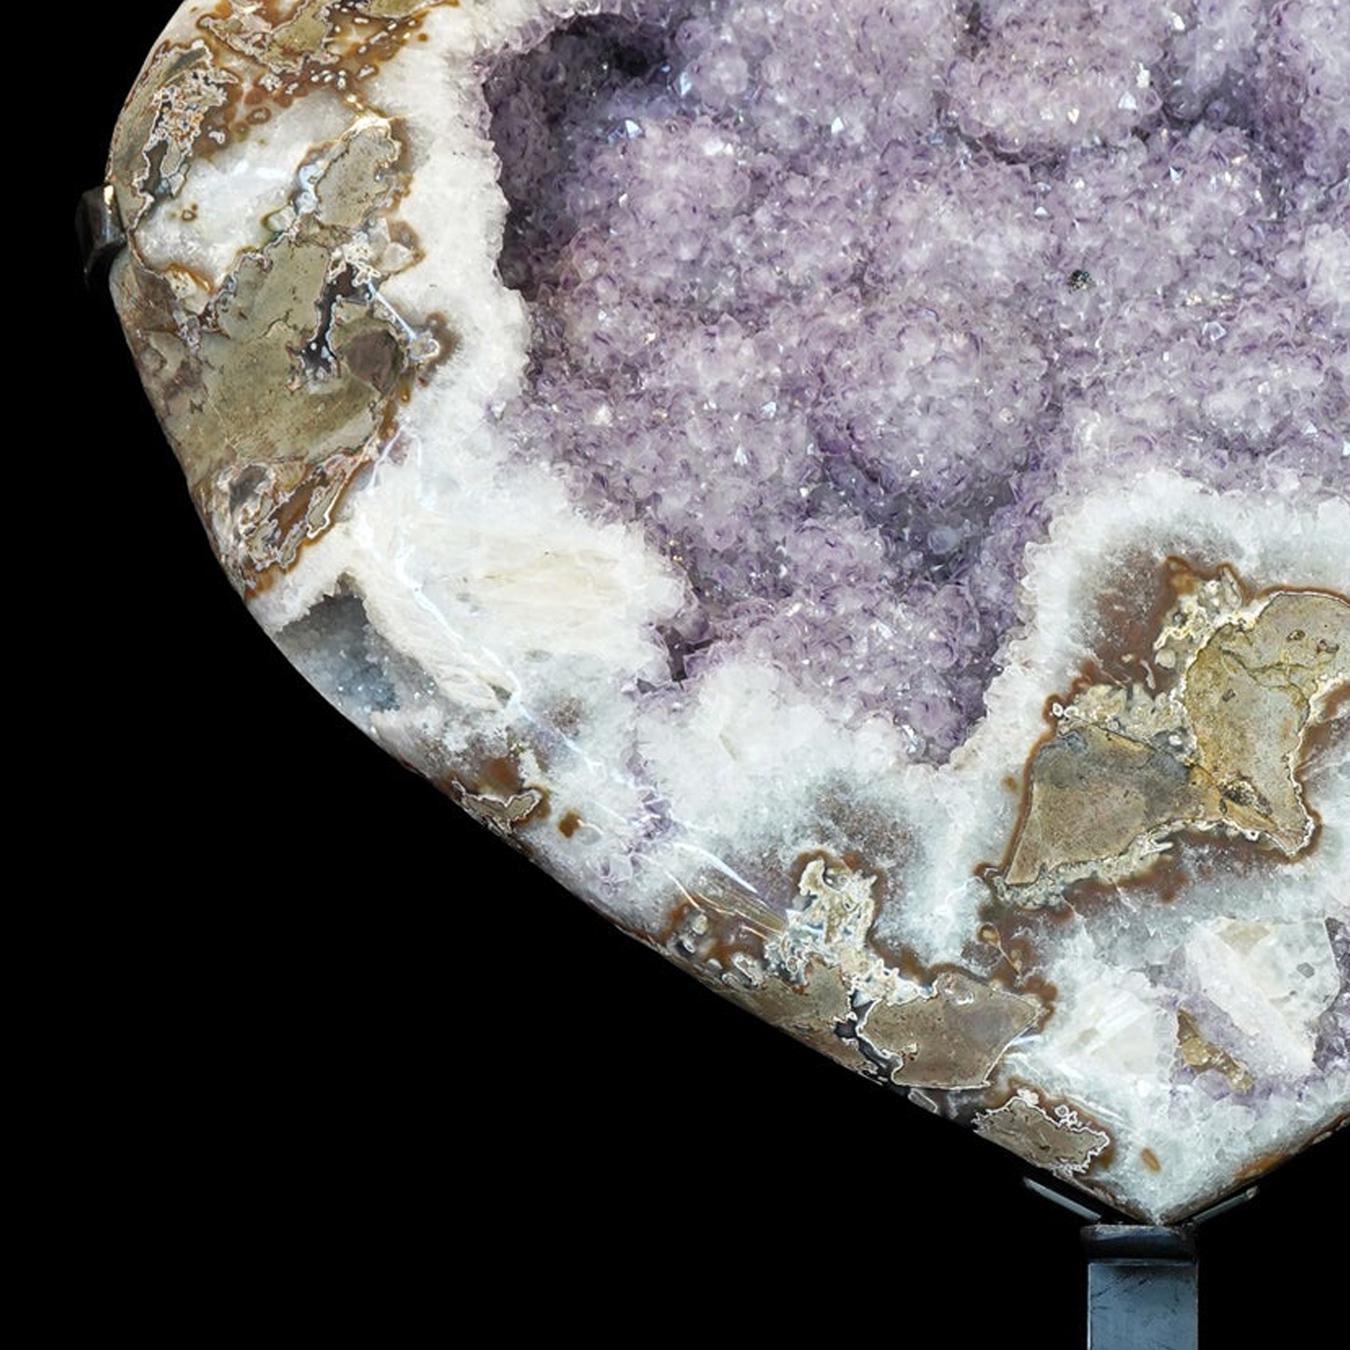 heart shaped geode found